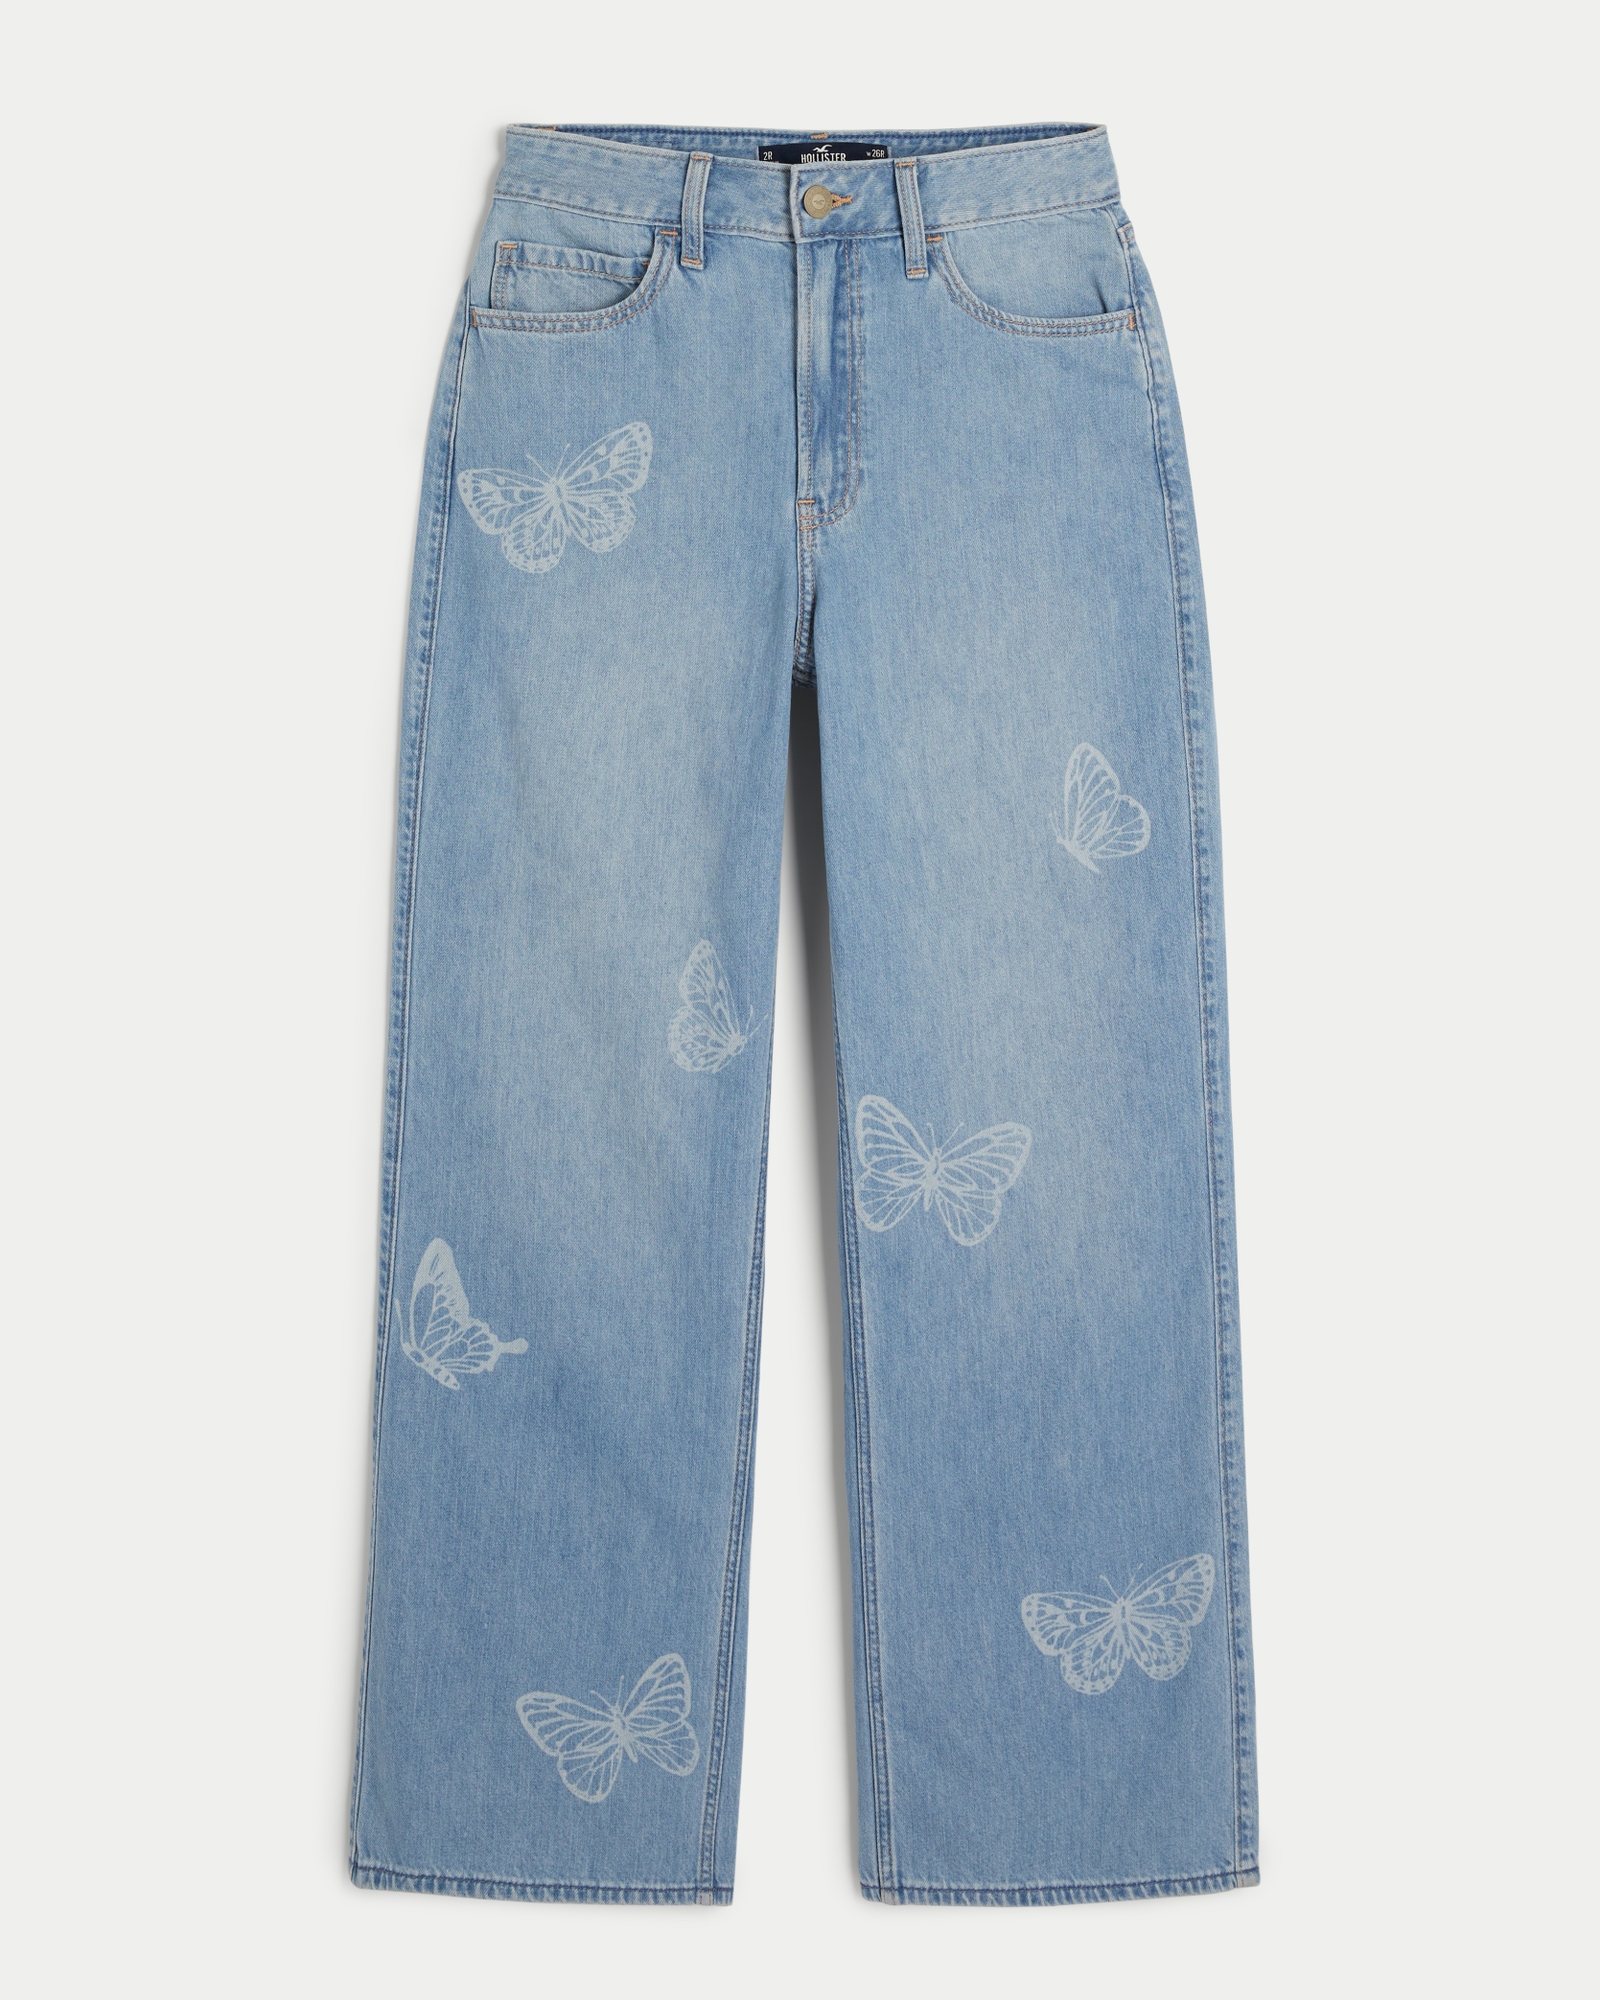 Black Baggy Jeans Women Butterfly Print Aesthetic Denim Pants